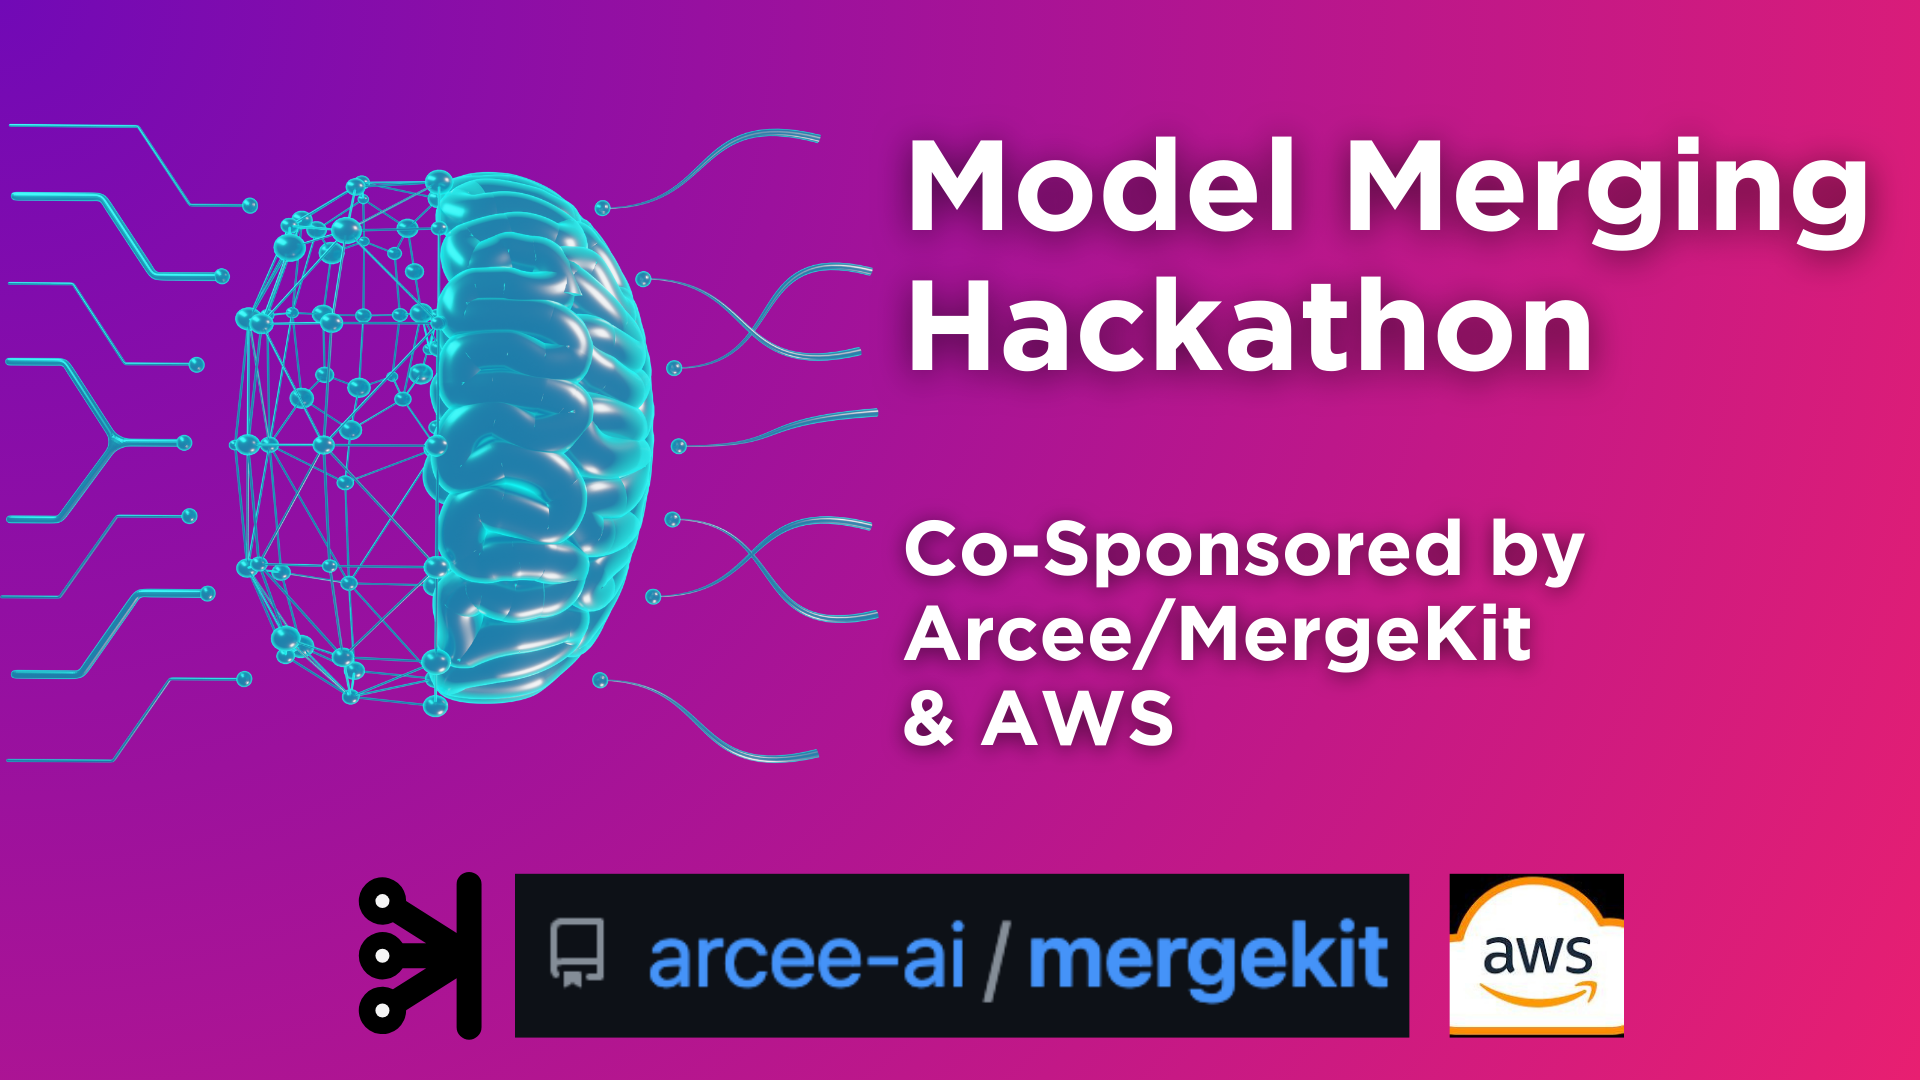 Arcee/Mergekit launch Model Merging Hackathon